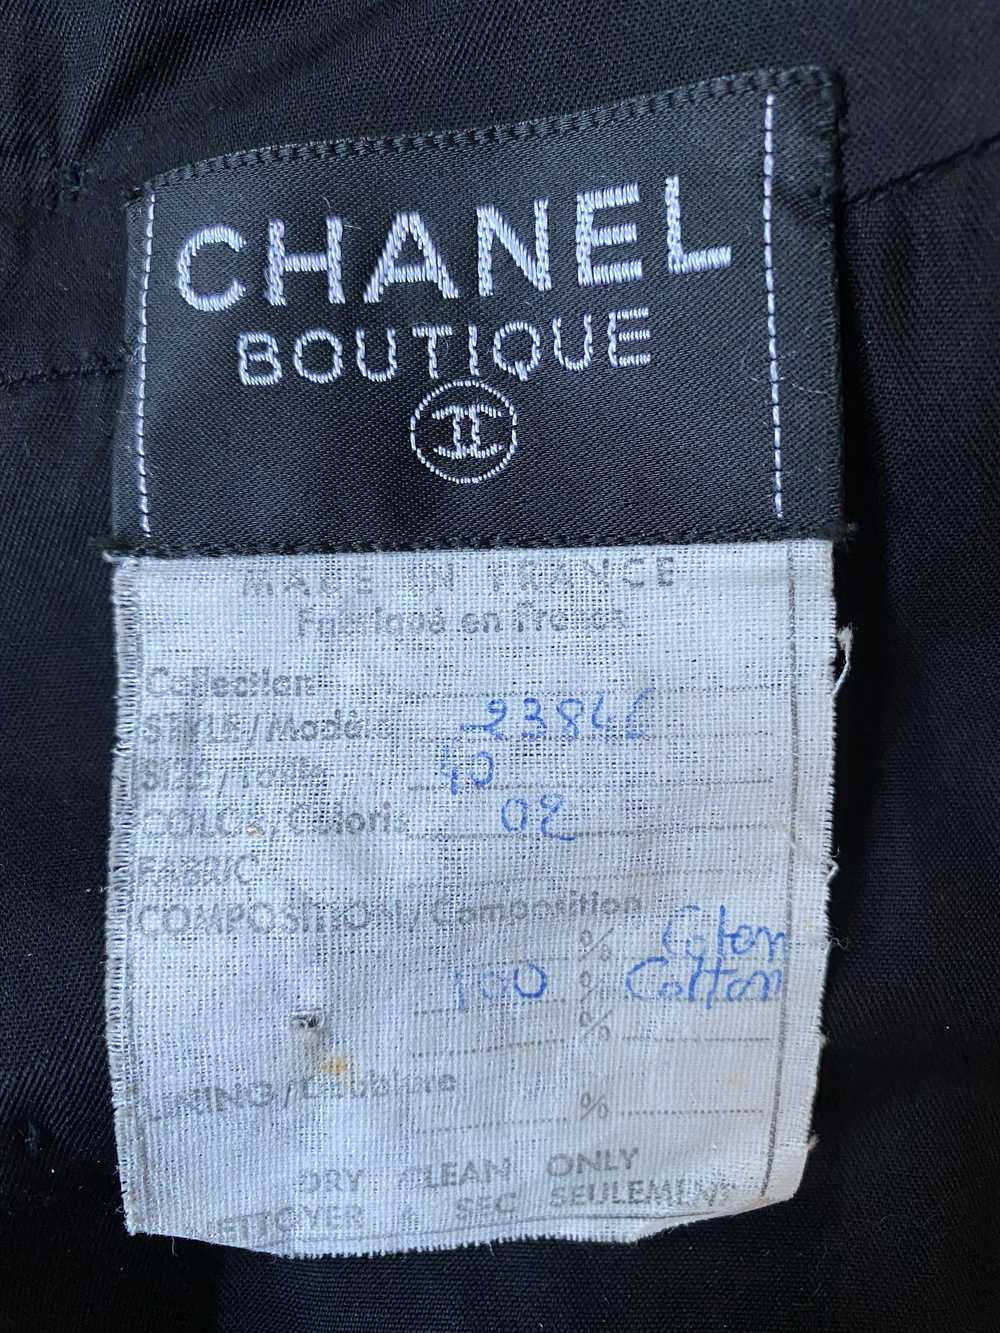 1986 Runway Chanel Black Cotton Peplum Dress - image 8